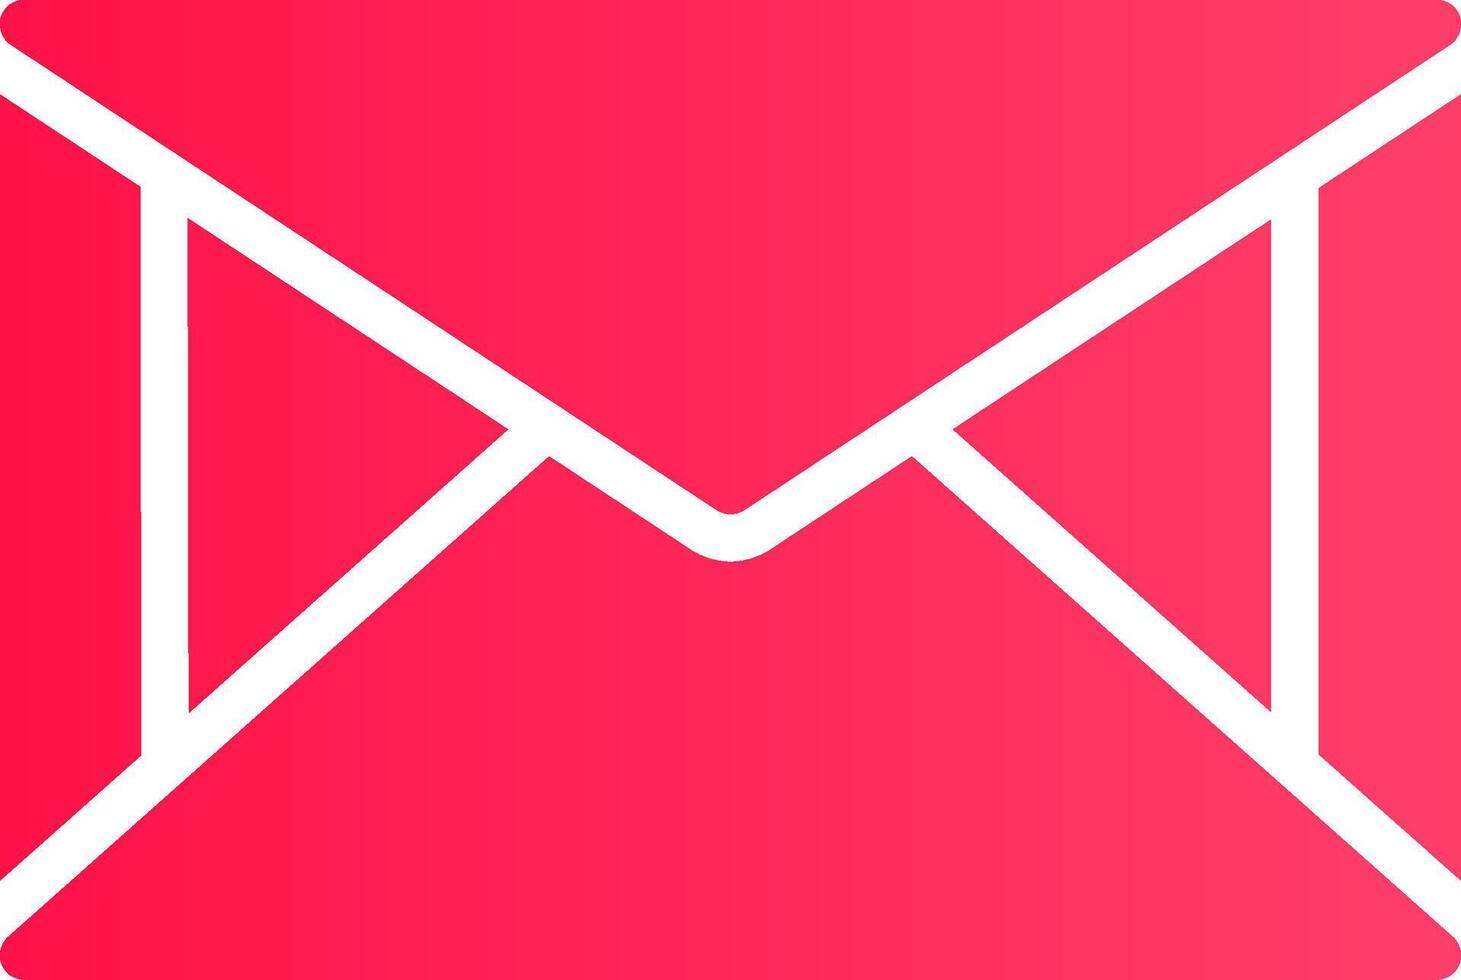 Email Creative Icon Design vector